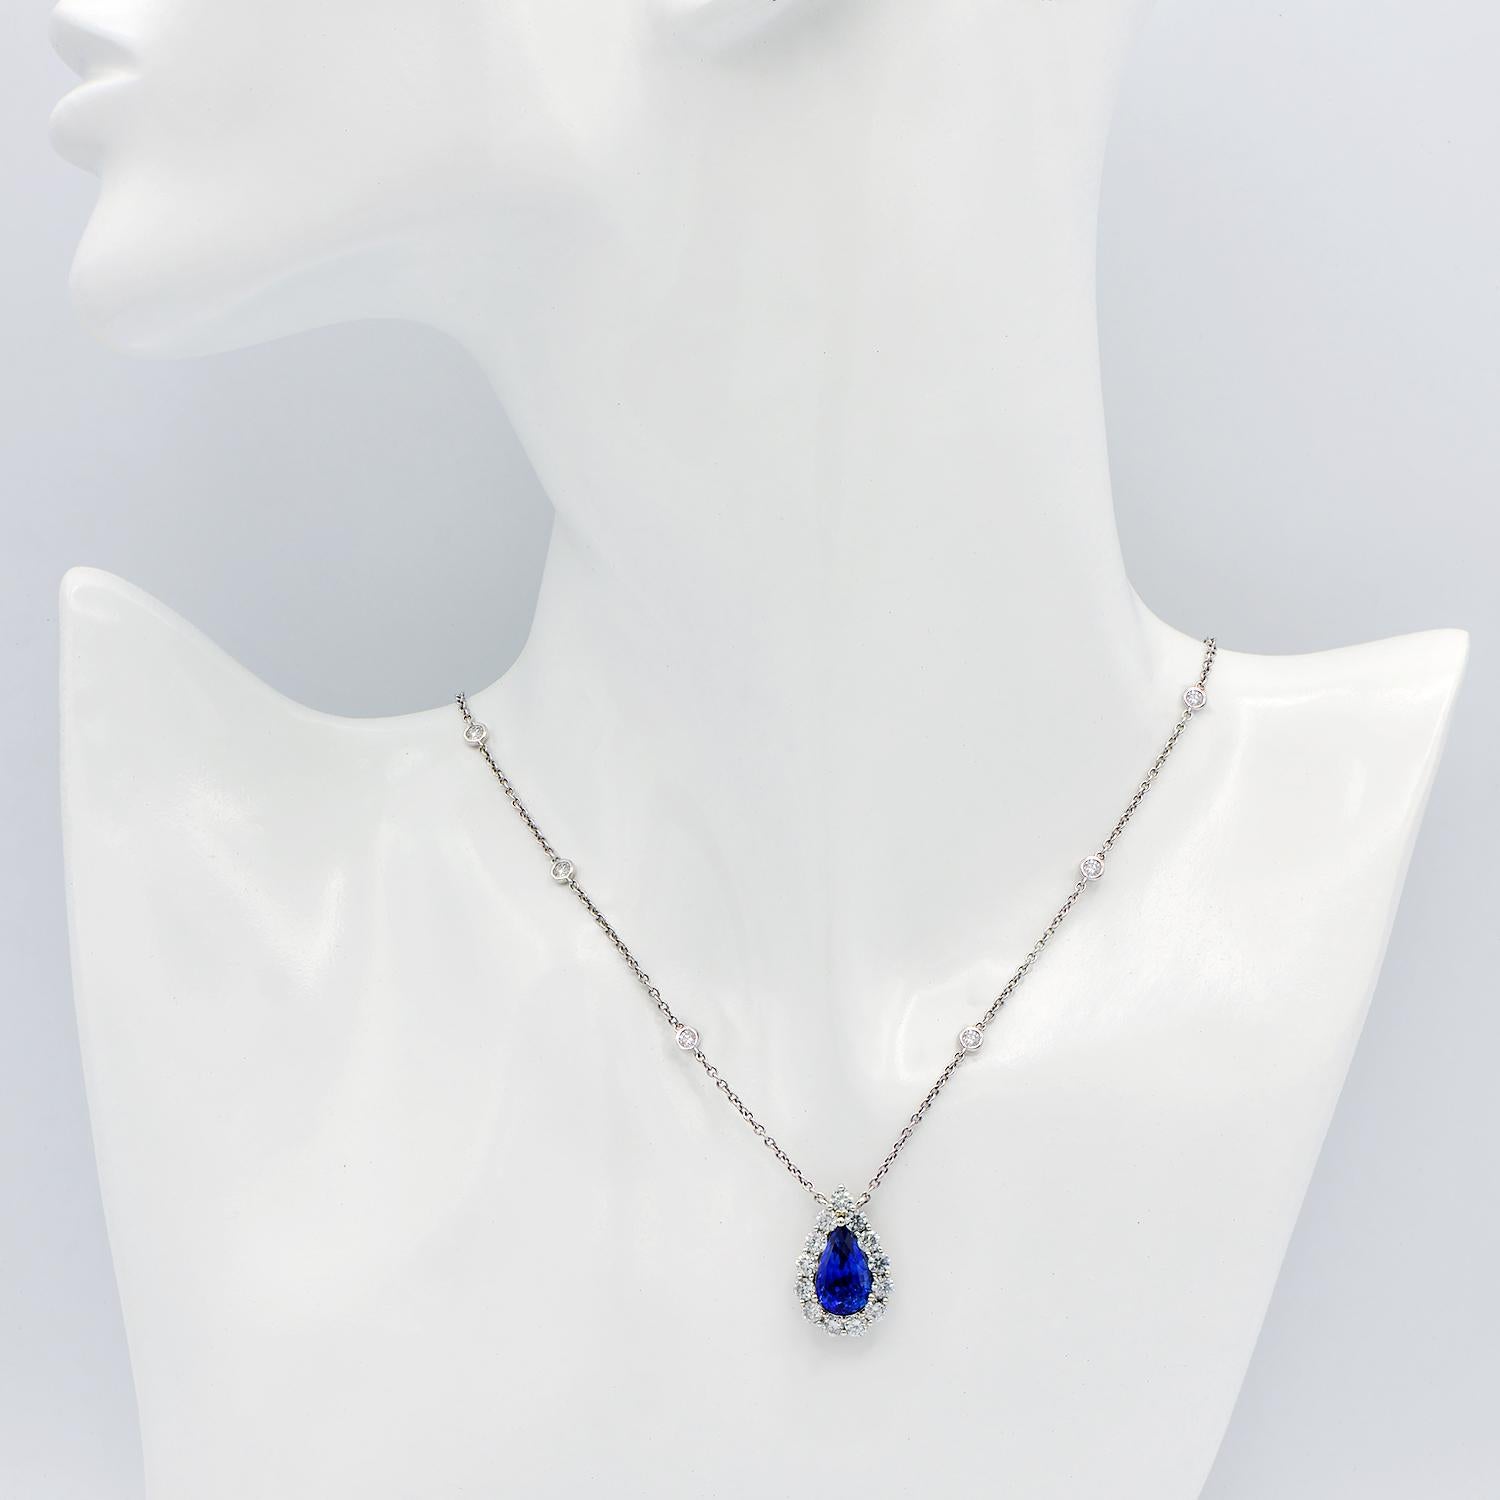 Contemporary 18K White Gold Blue Sapphire Drop with Diamond Halos Pendant Necklace